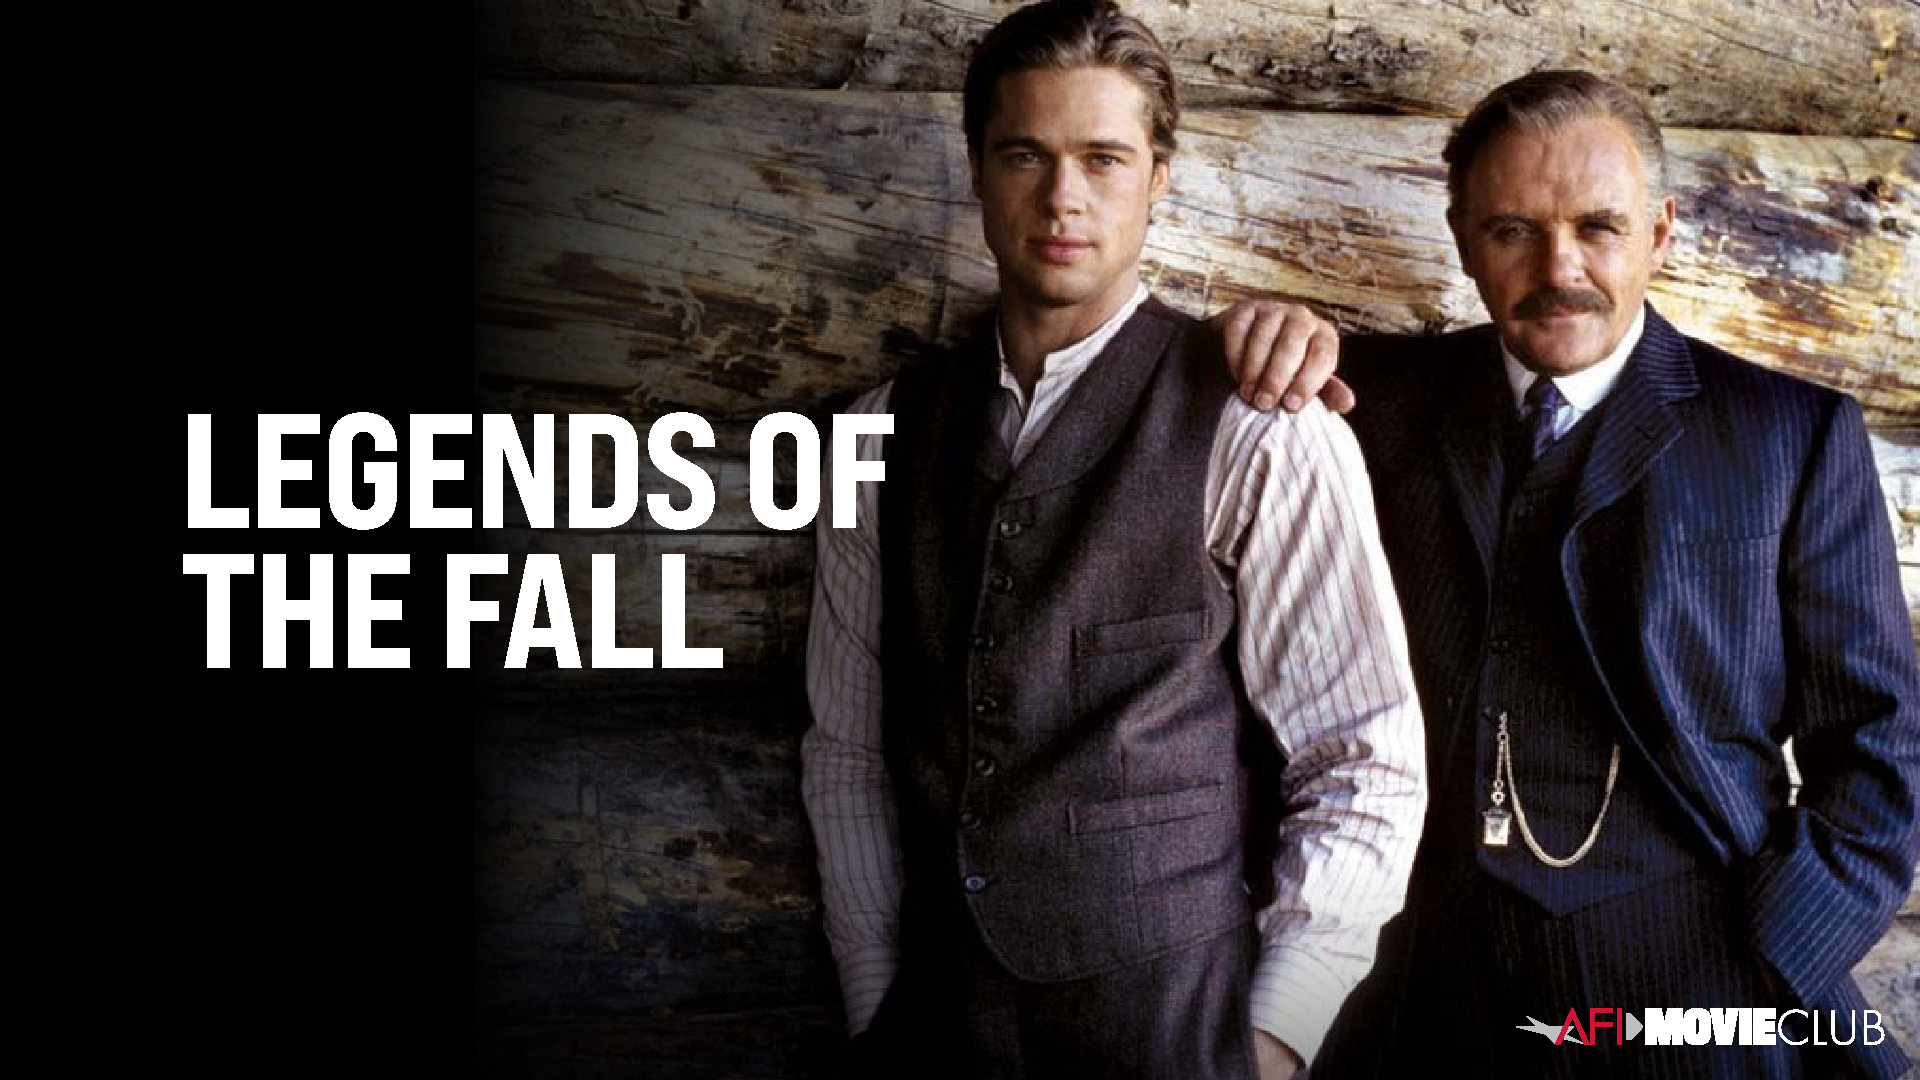 Legends of the Fall Film Still - Brad Pitt and Anthony Hopkins